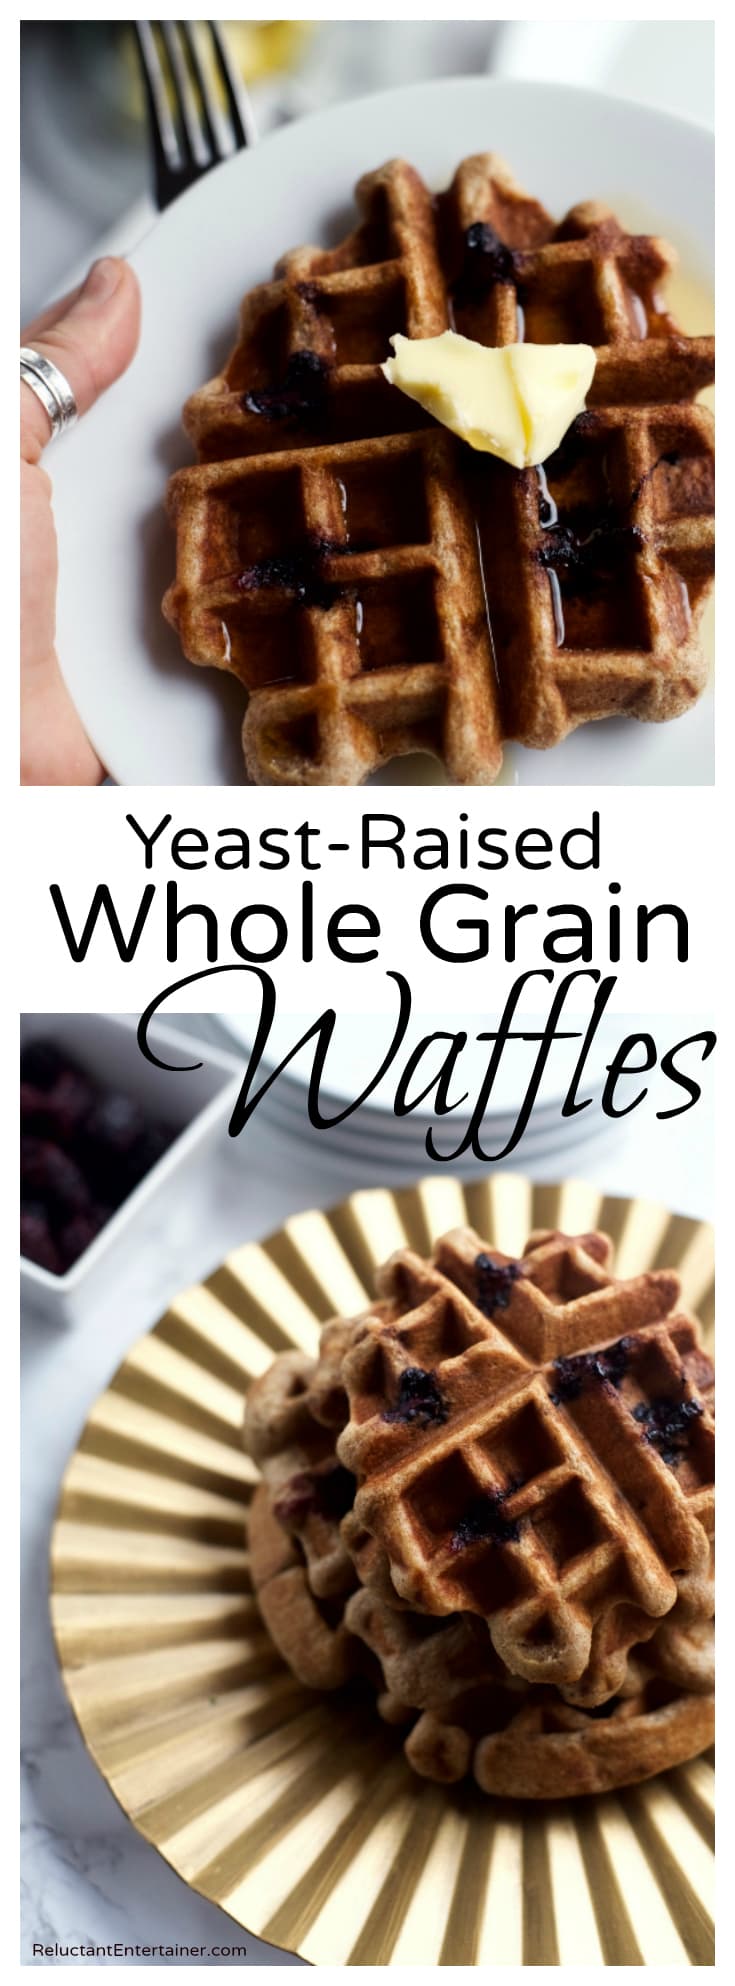 Yeast-Raised Whole Grain Waffles